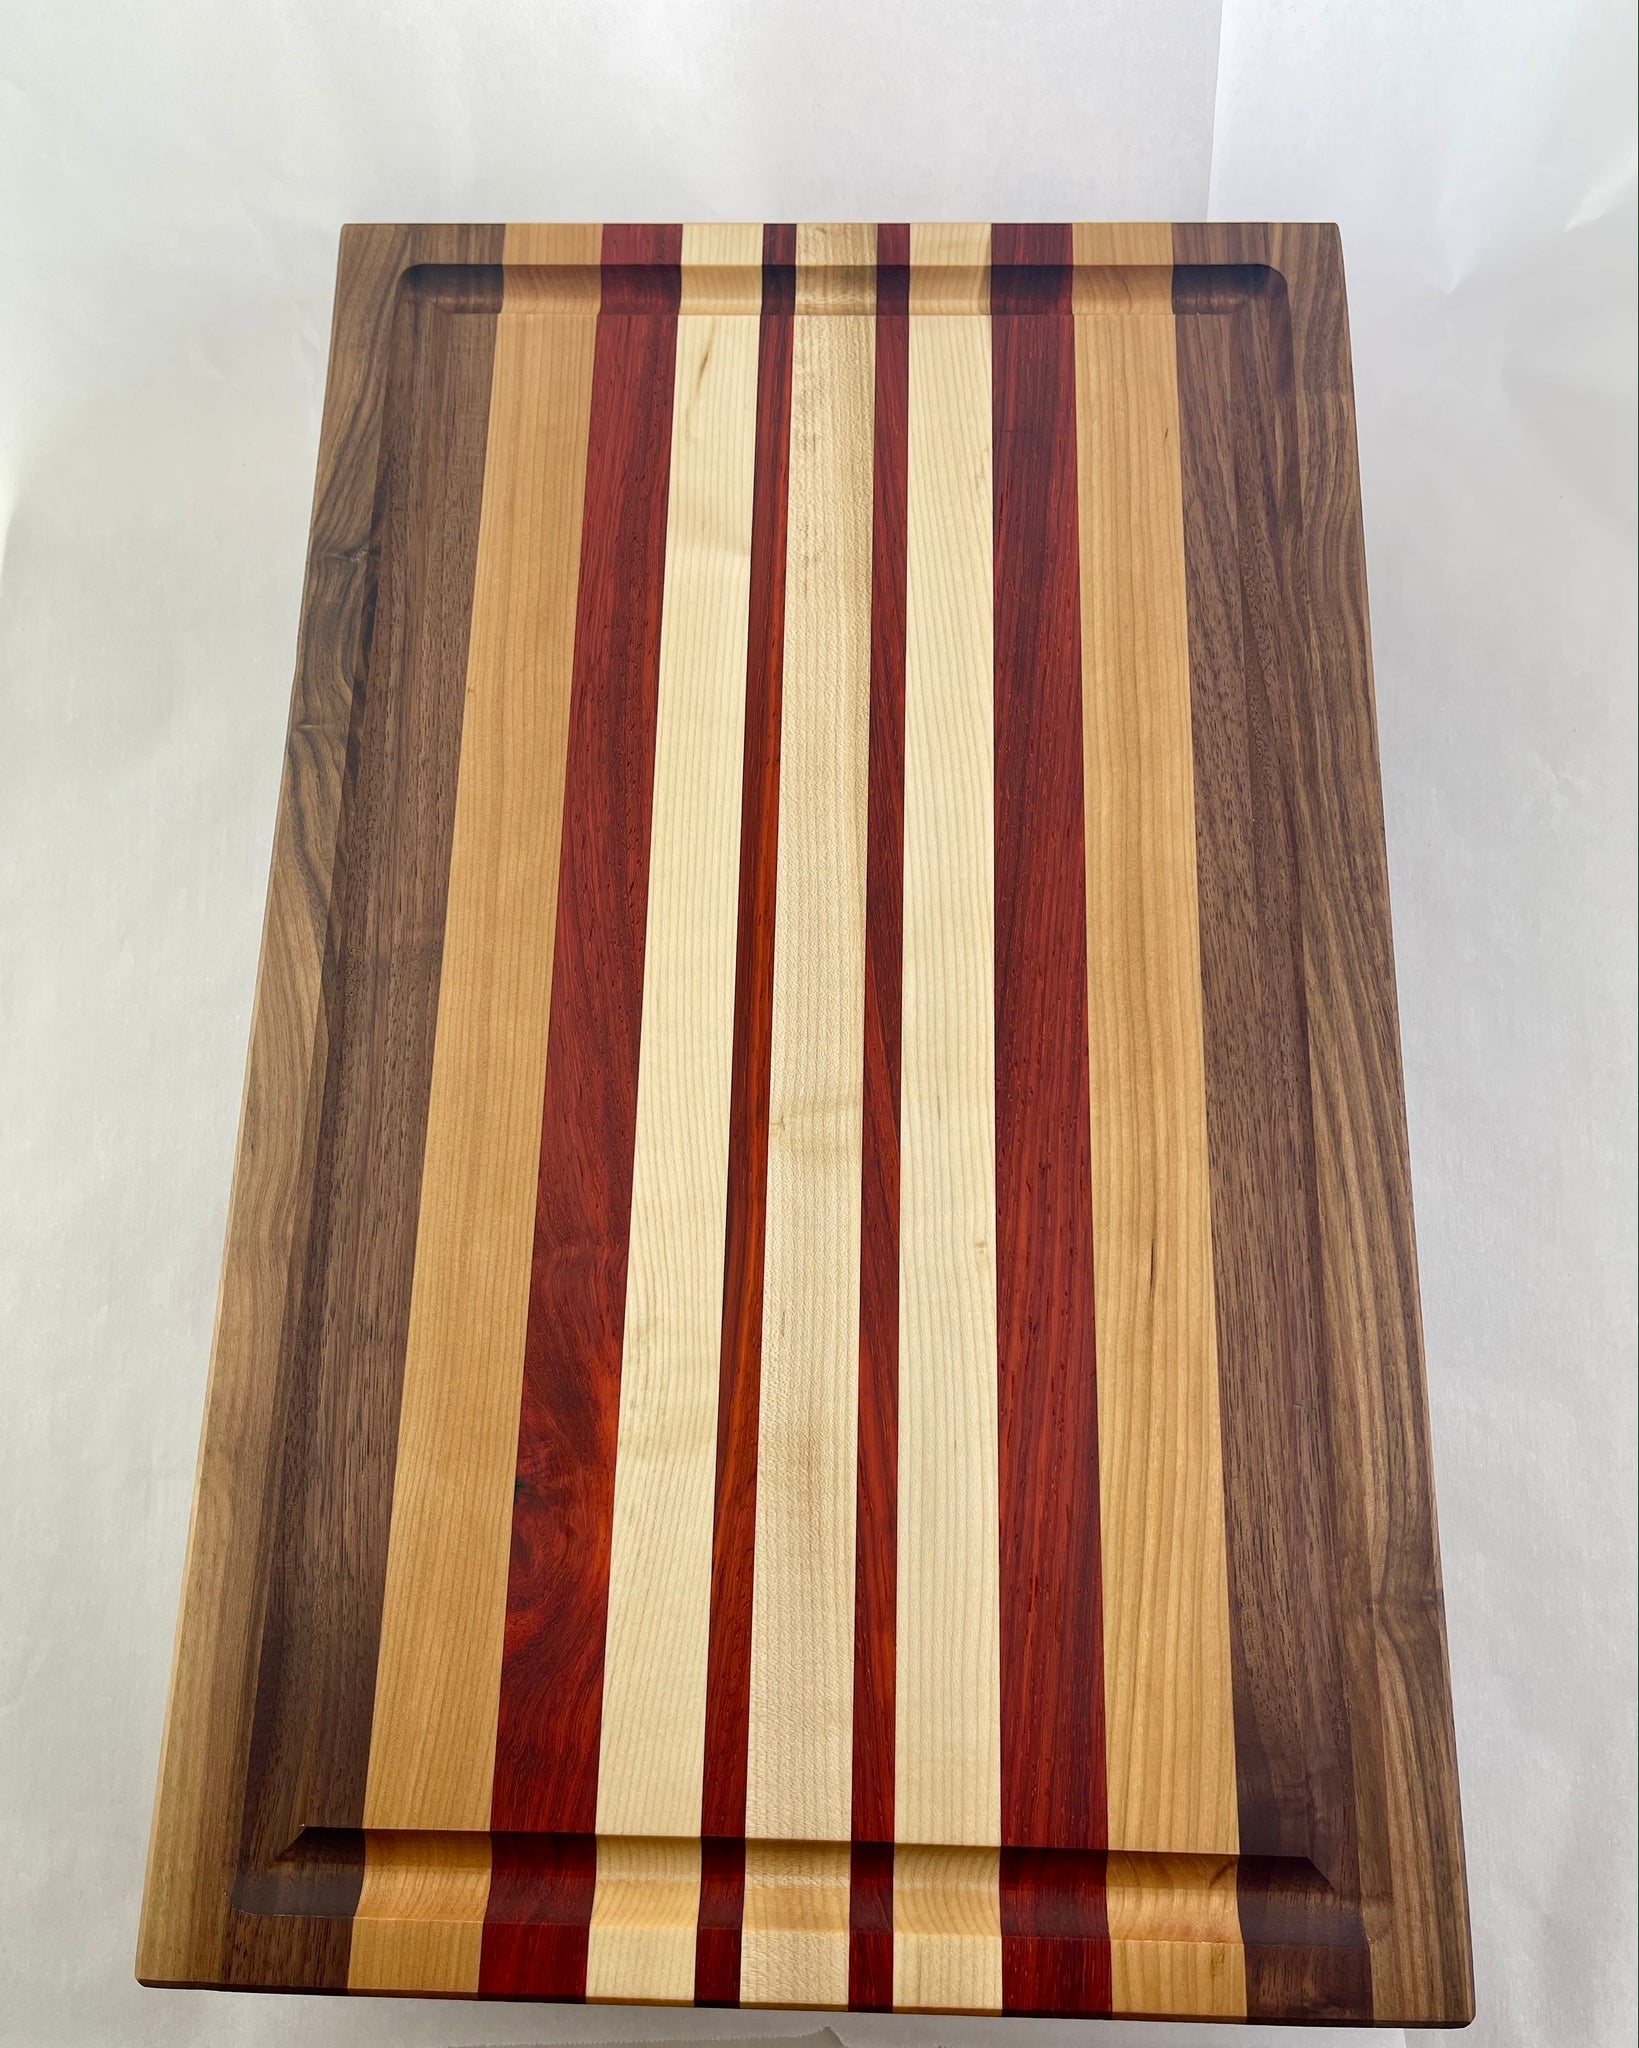 Black Walnut and Cherry Cutting Board (12x12) - Shape of Yew